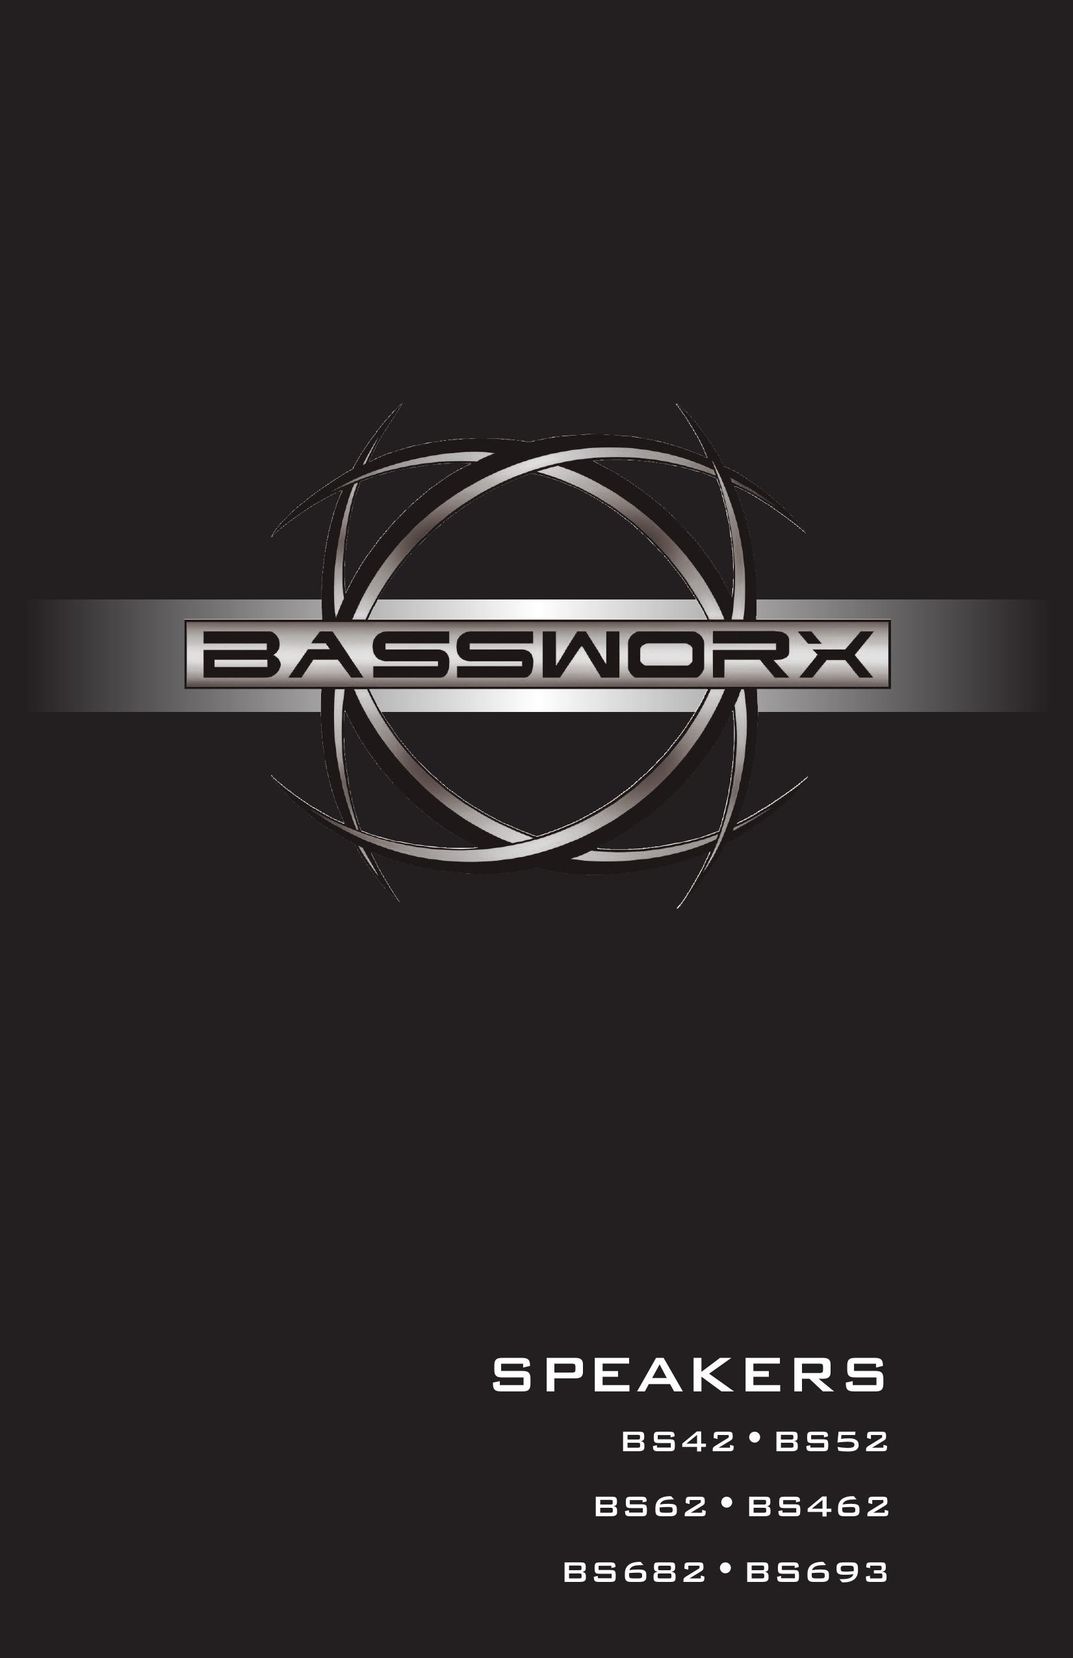 Bassworx BS693 Car Speaker User Manual